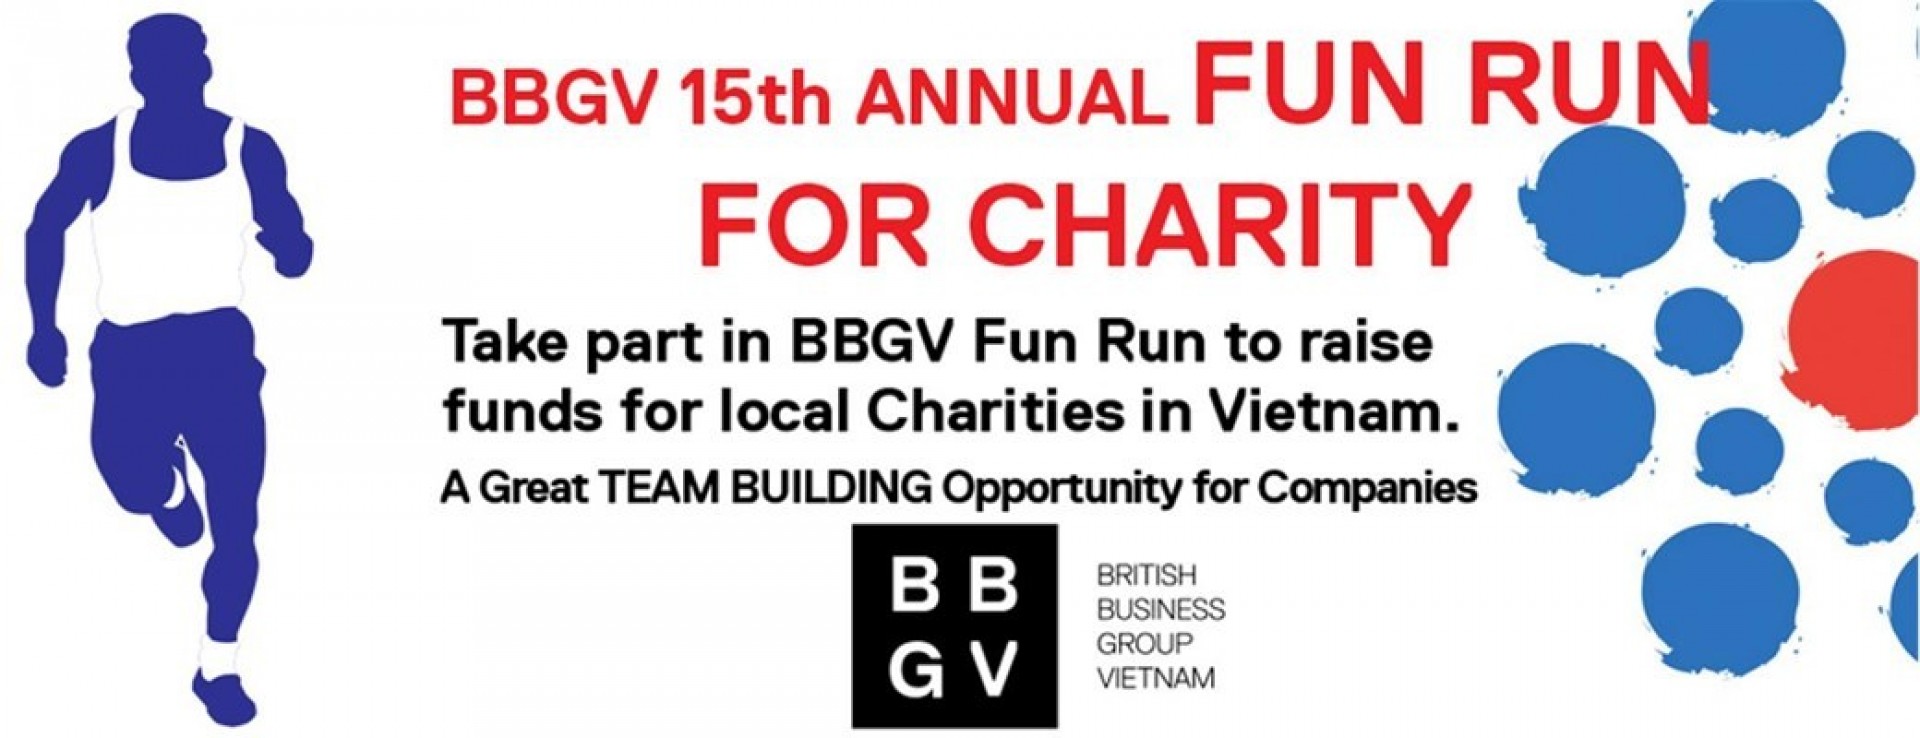 Annual Fun Run For Charity